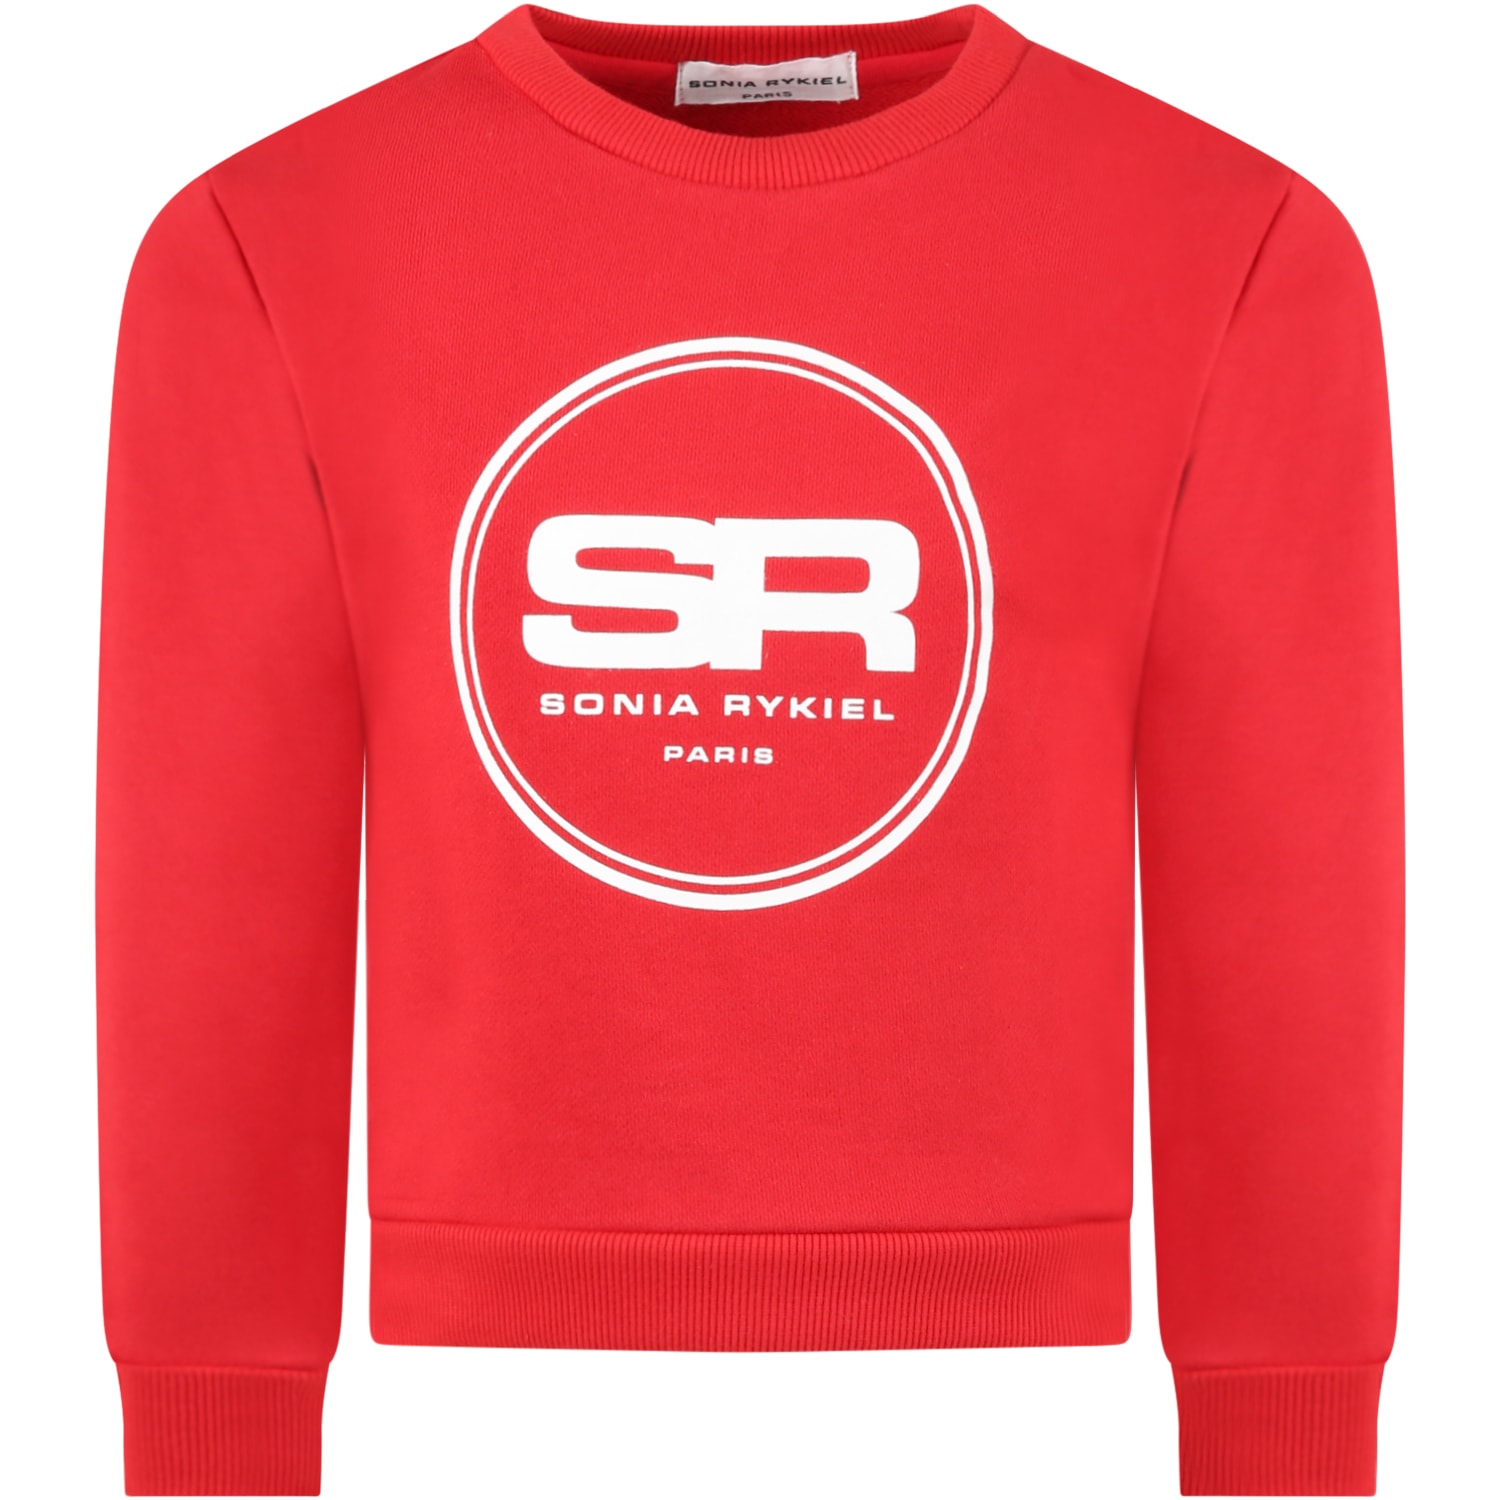 Sonia Rykiel Red Sweatshirt For Girl With Logos